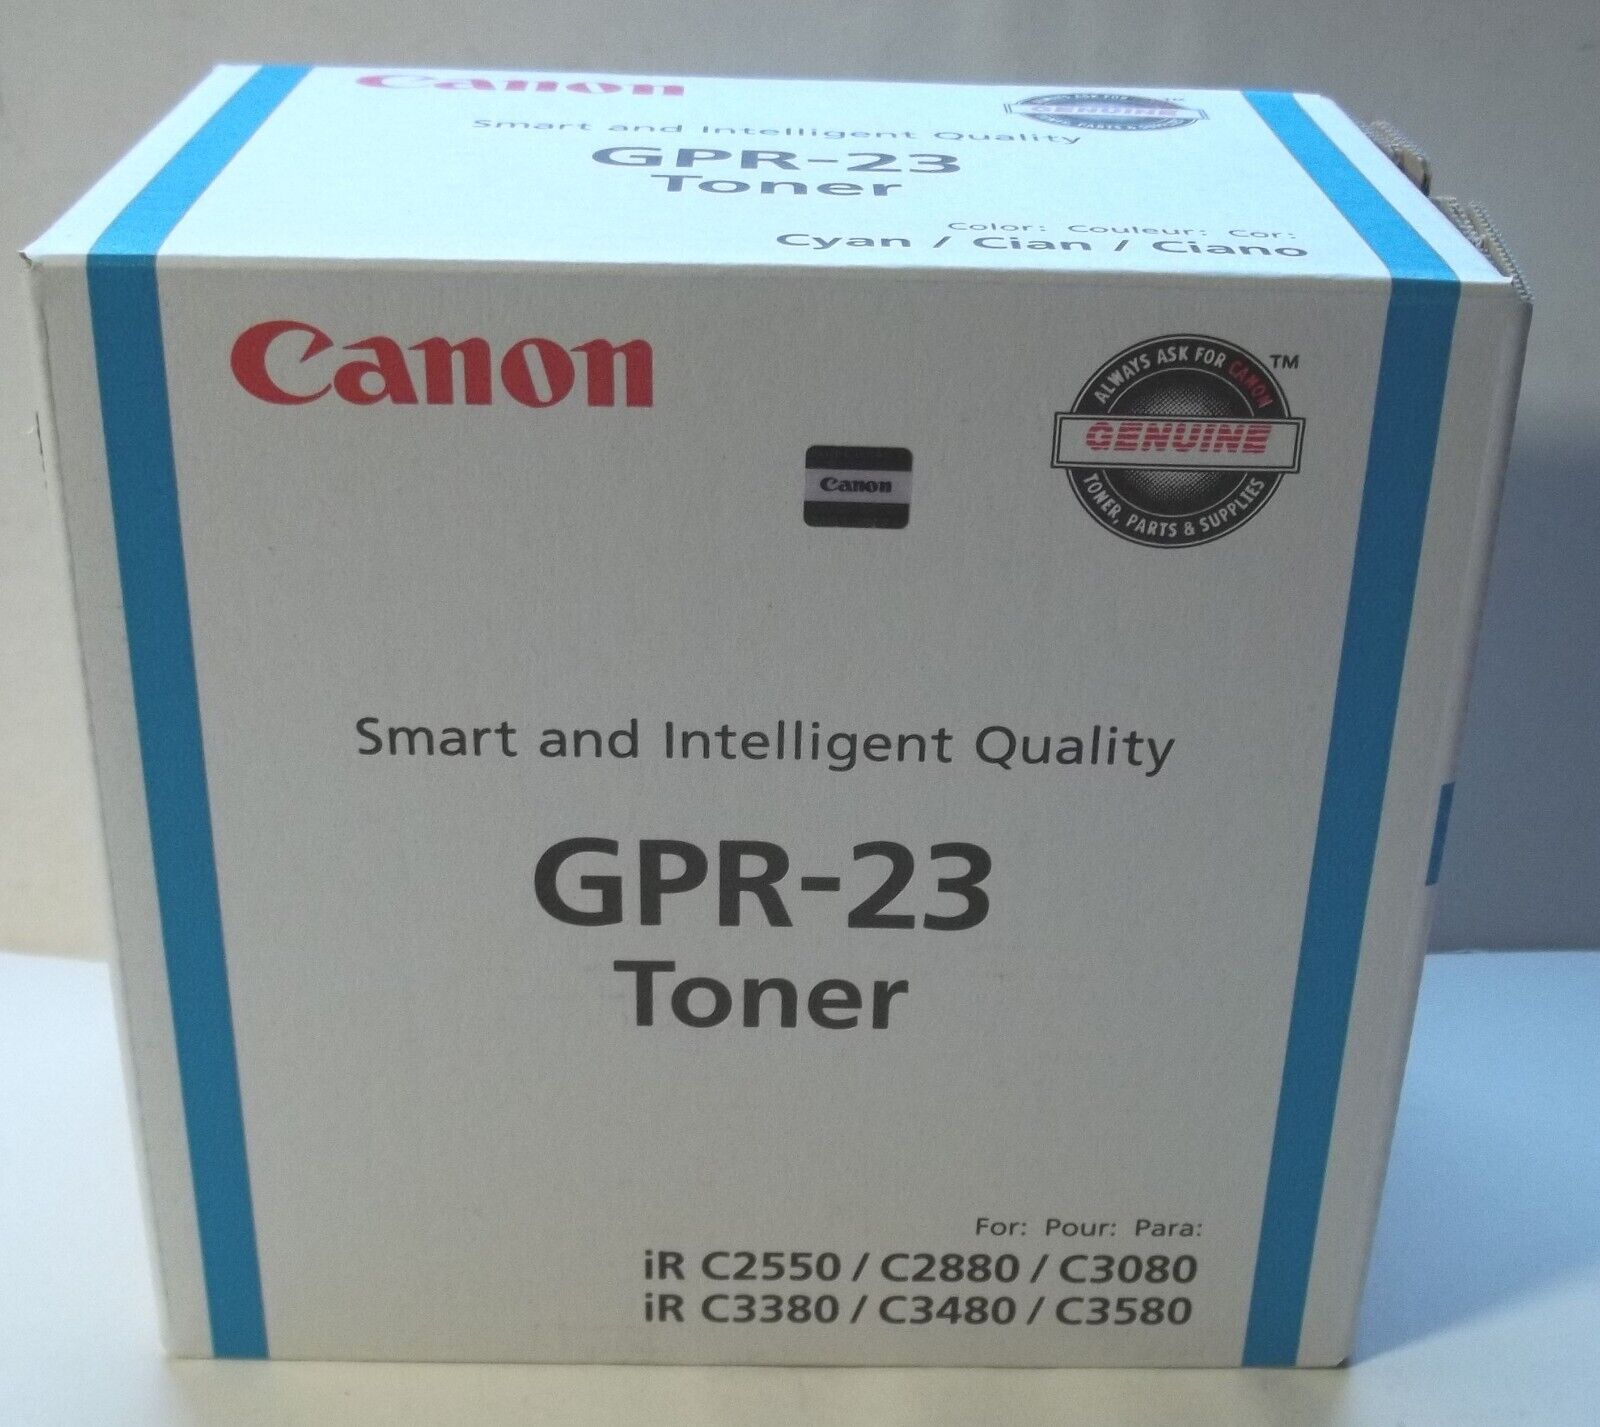 New (Sealed) Genuine Canon GPR-23 Cyan 0453B003 Toner Cartridge